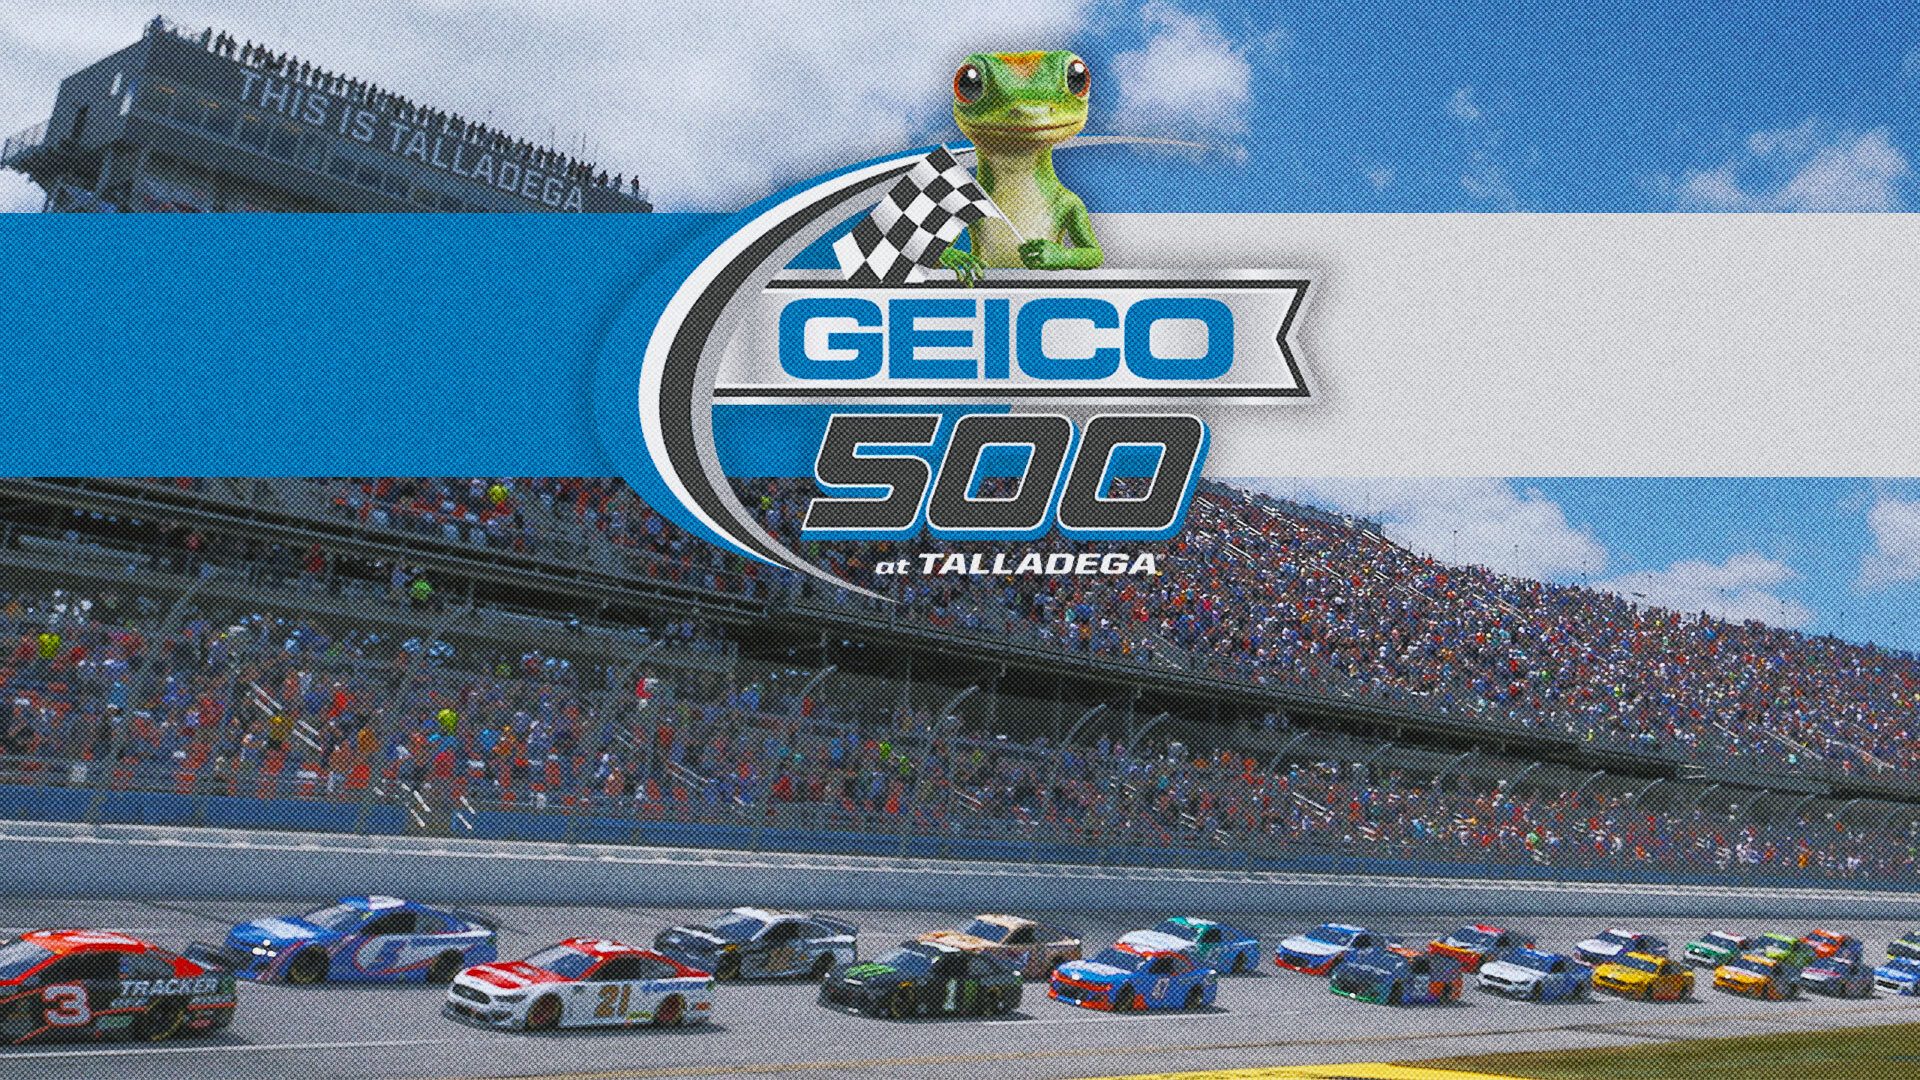 NASCAR GEICO 500: Ross Chastain wins in wild finish at Talladega